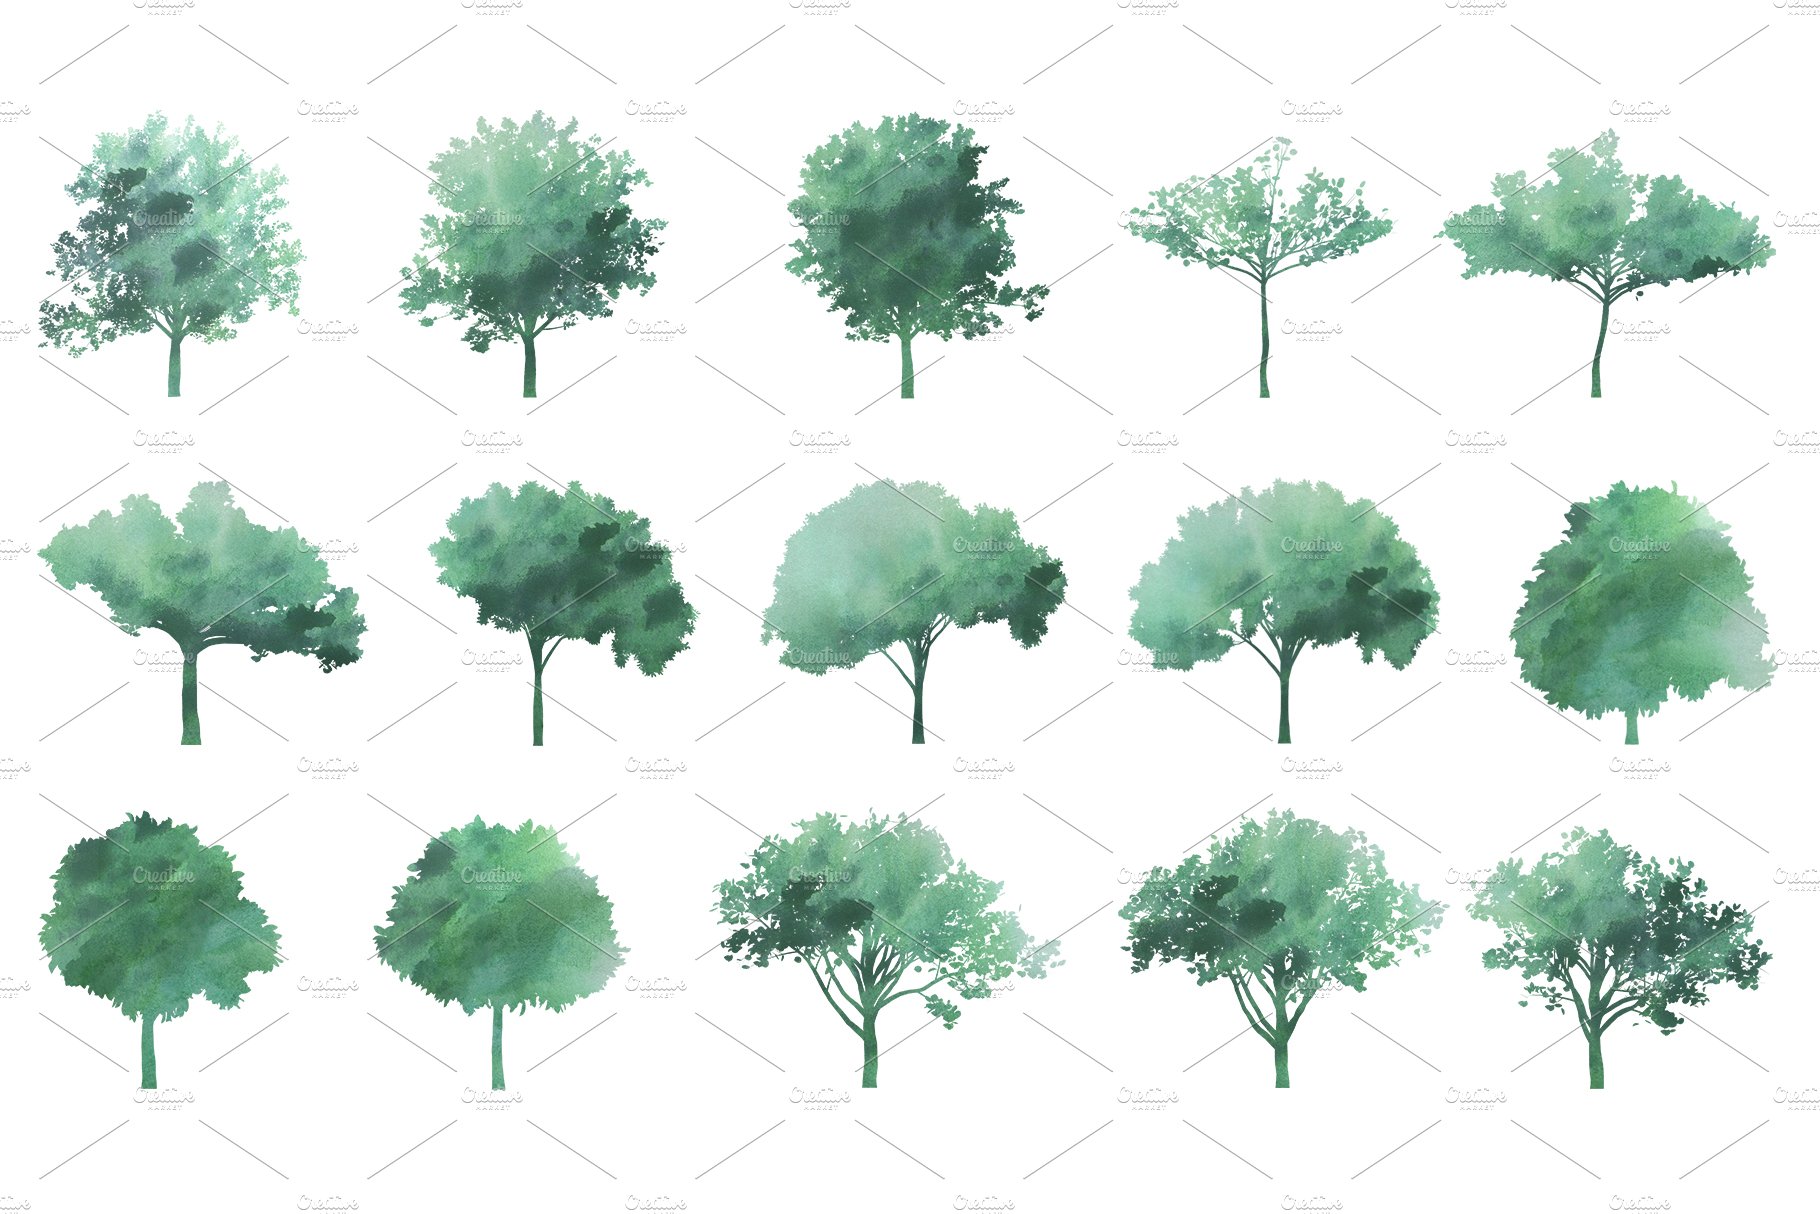 Trees in AutoCAD | Download CAD free (660.79 KB) | Bibliocad